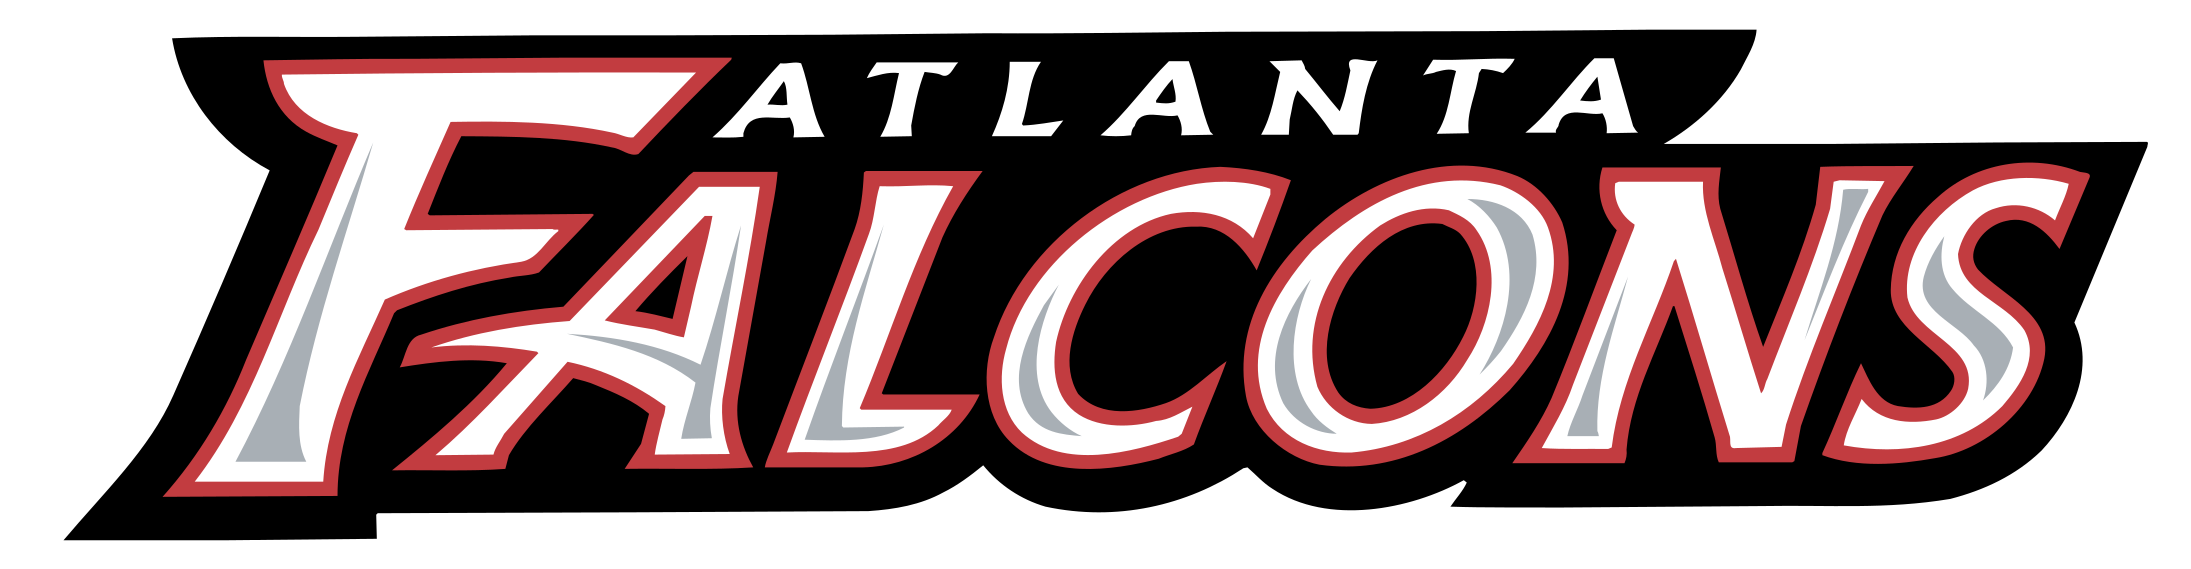 Atlanta Falcons Logo PNG Transparent Image